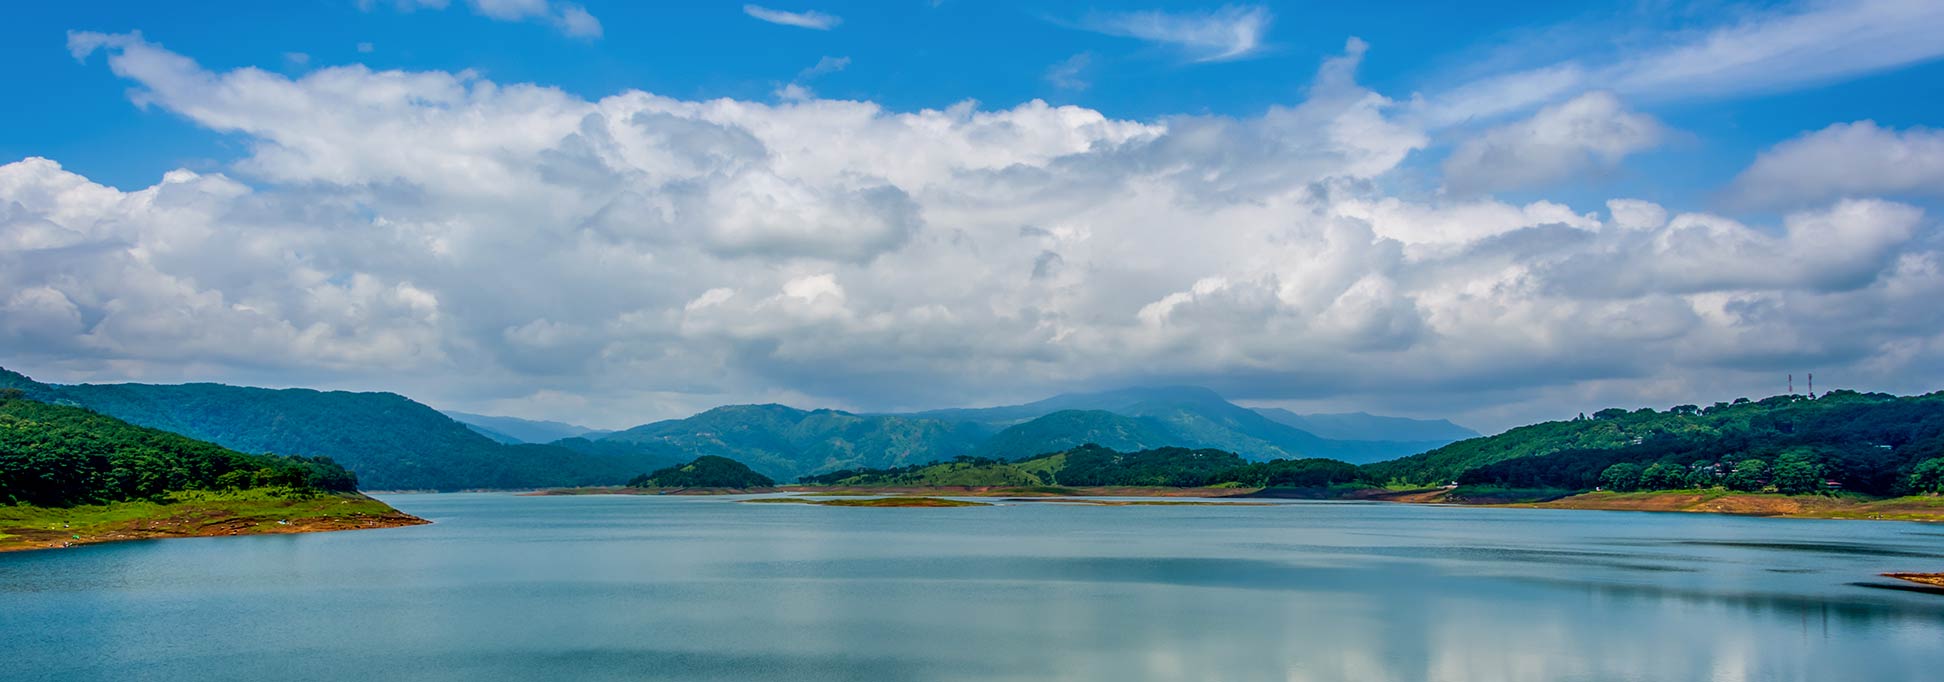 Umiam Lake (also known as Barapani Lake) near Shillong in Meghalaya